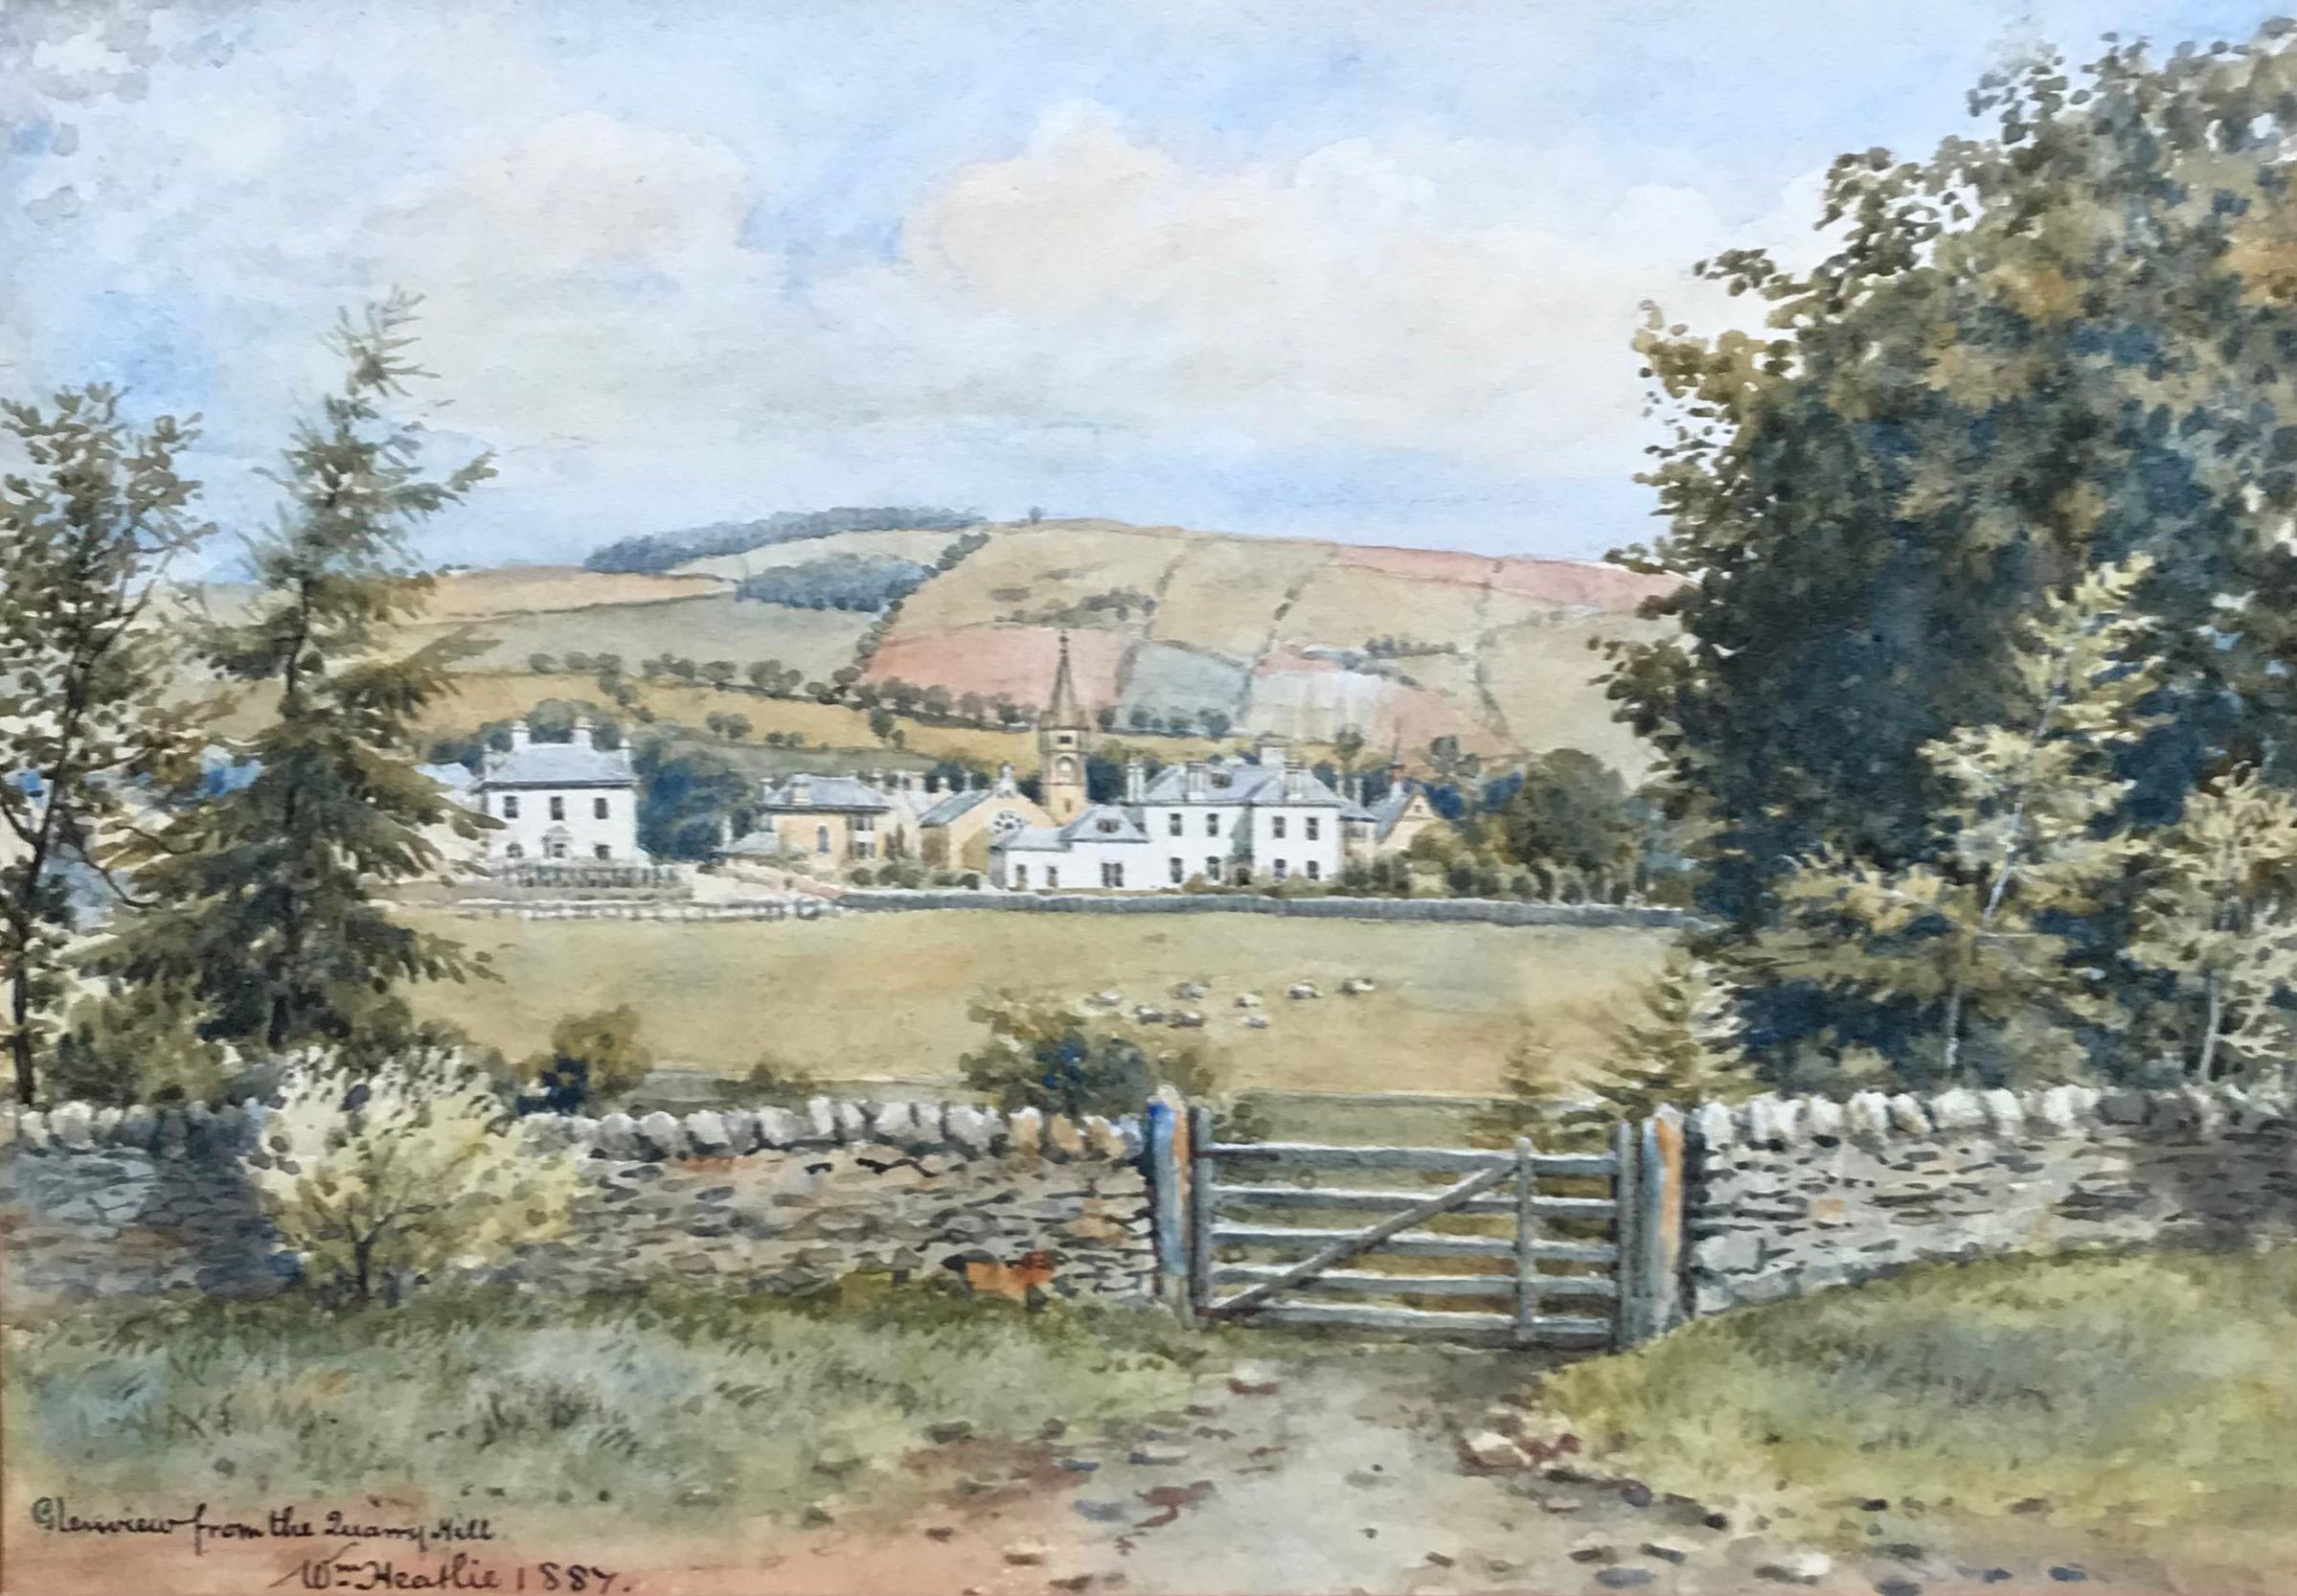 Landscape by William Heatlie - Watercolor on paper 27x37 cm